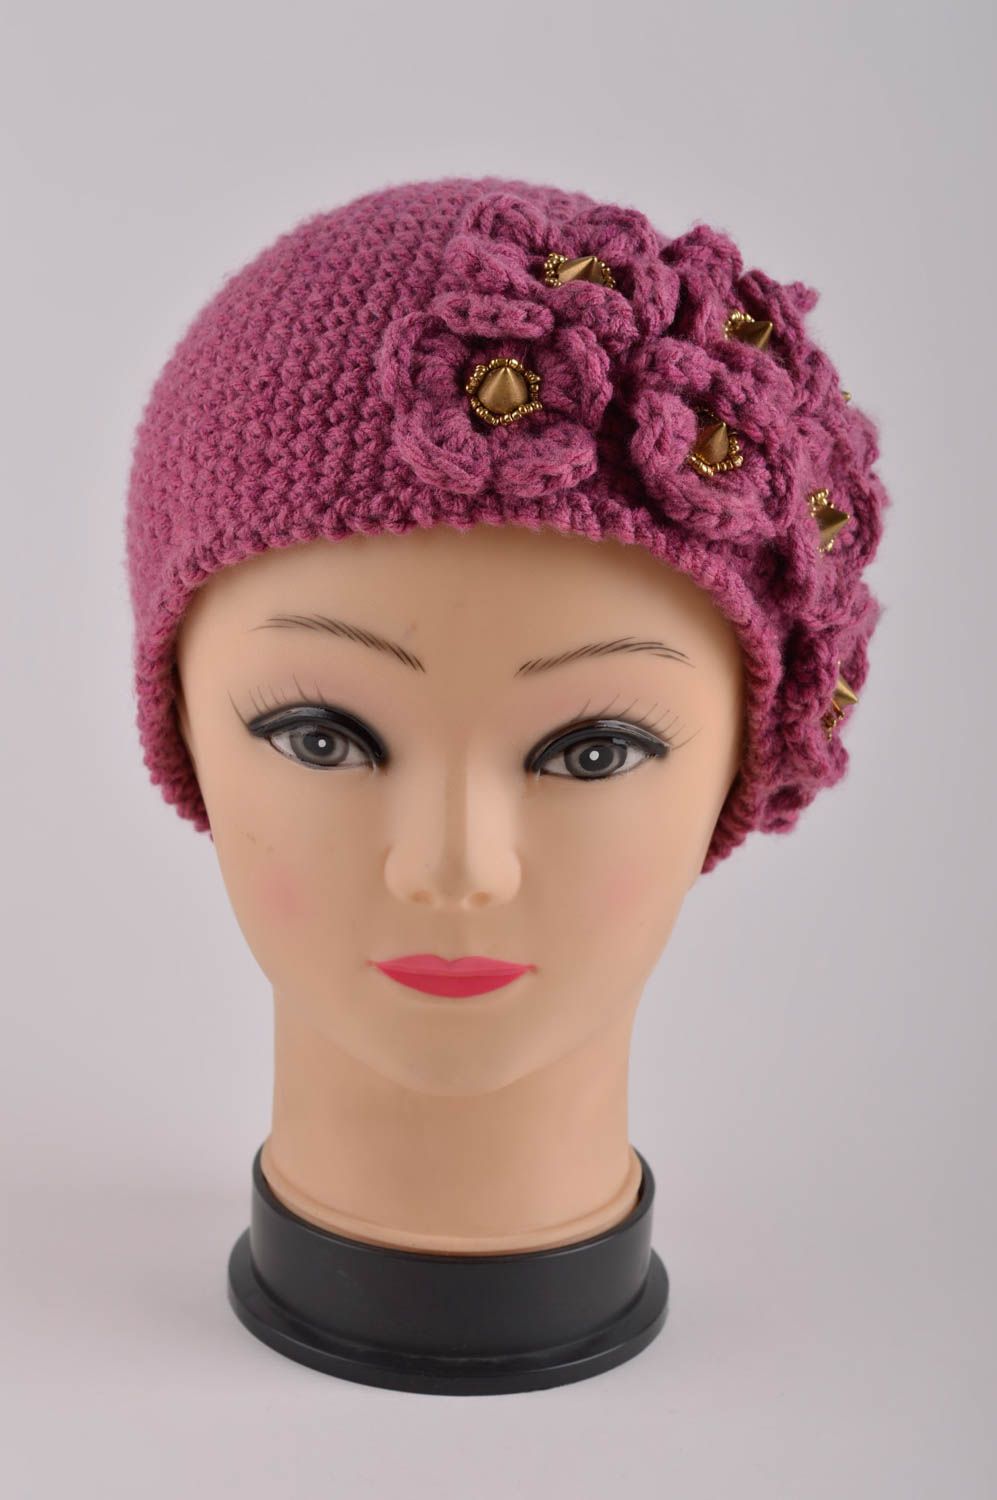 Handmade ladies hat designer accessories winter hats for women gifts for girls photo 3